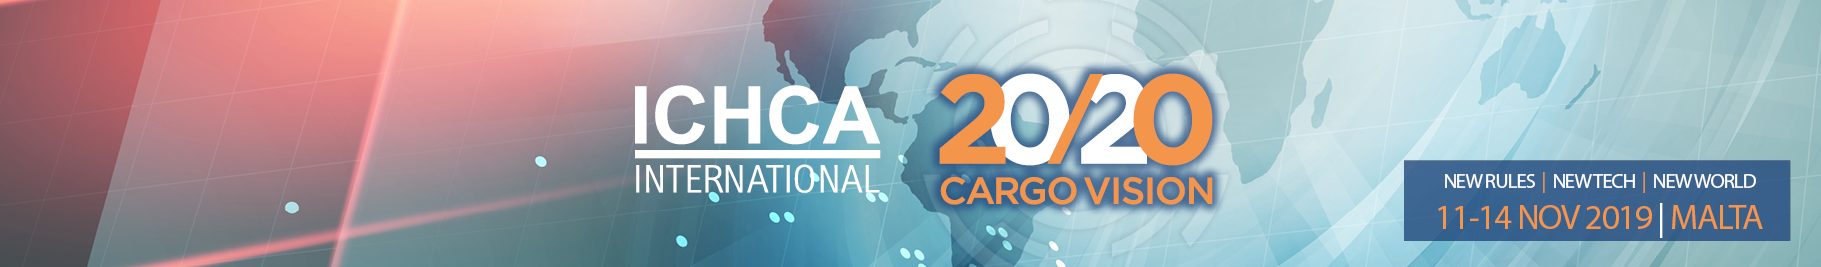 2019 ICHCA International 20/20 Cargo Vision Conference & Exhibition